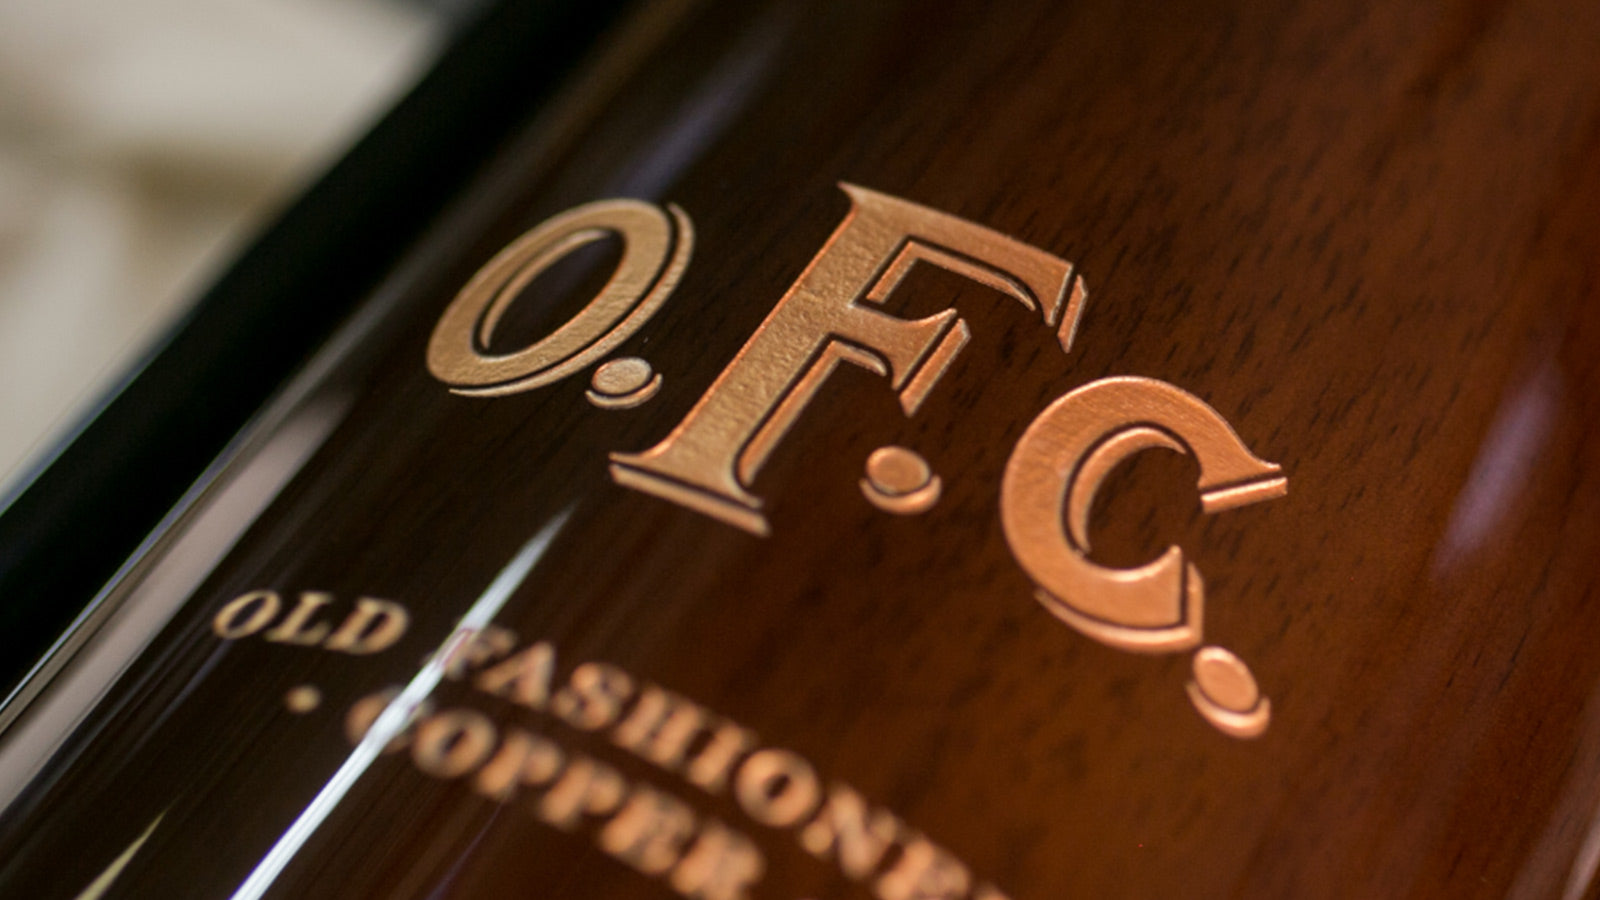 O.F.C. Vintage 1996 Bourbon by Buffalo Trace